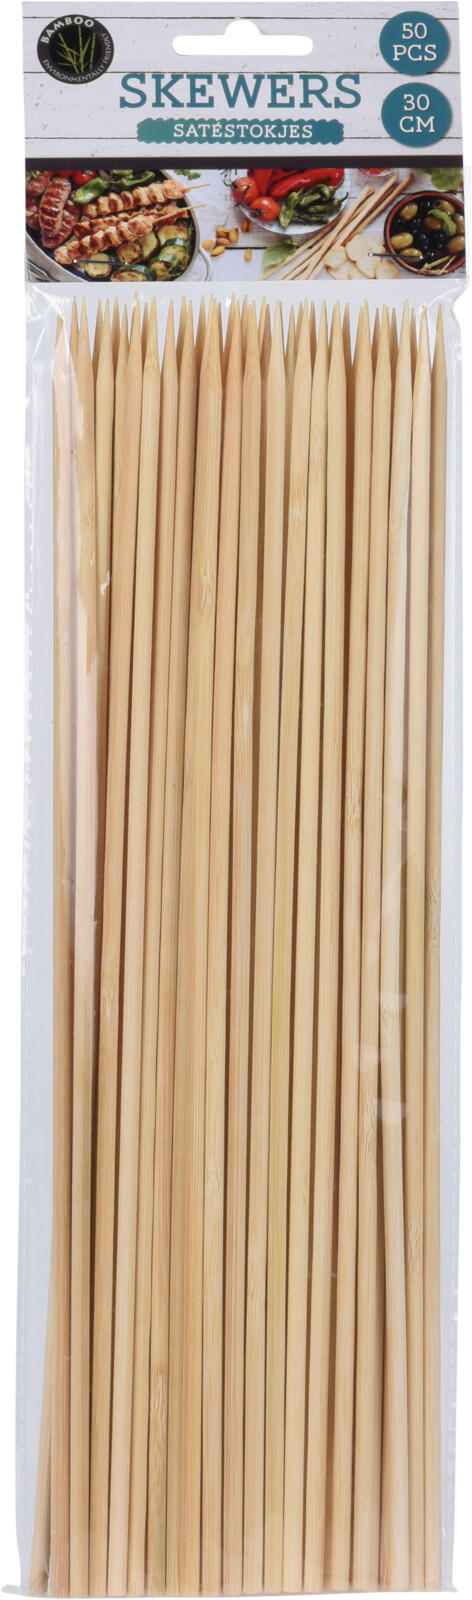 špejle bambus 30cmx4mm (50ks) 0.14 Kg MAXMIX Sklad14 386246 184